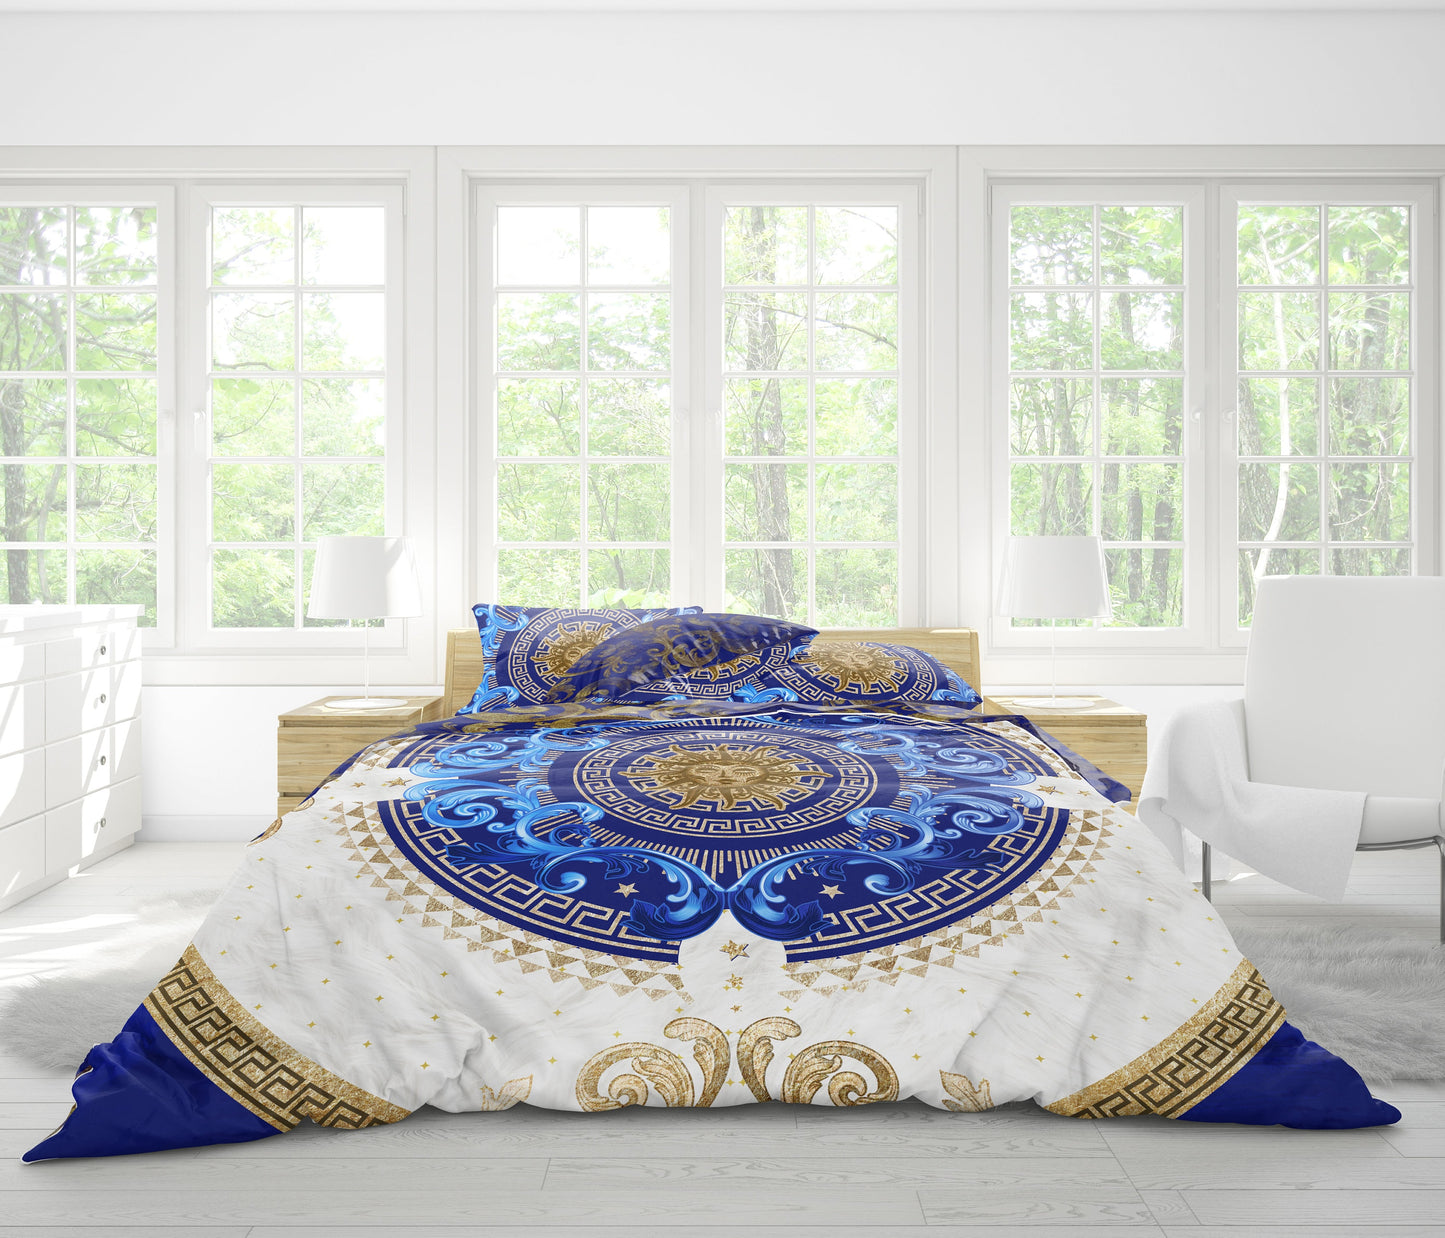 Baroque Eccentric Personalised Blue-Beige Bedding set • Reversible design • Cotton • microfiber • AU, EU, USA, queen, king